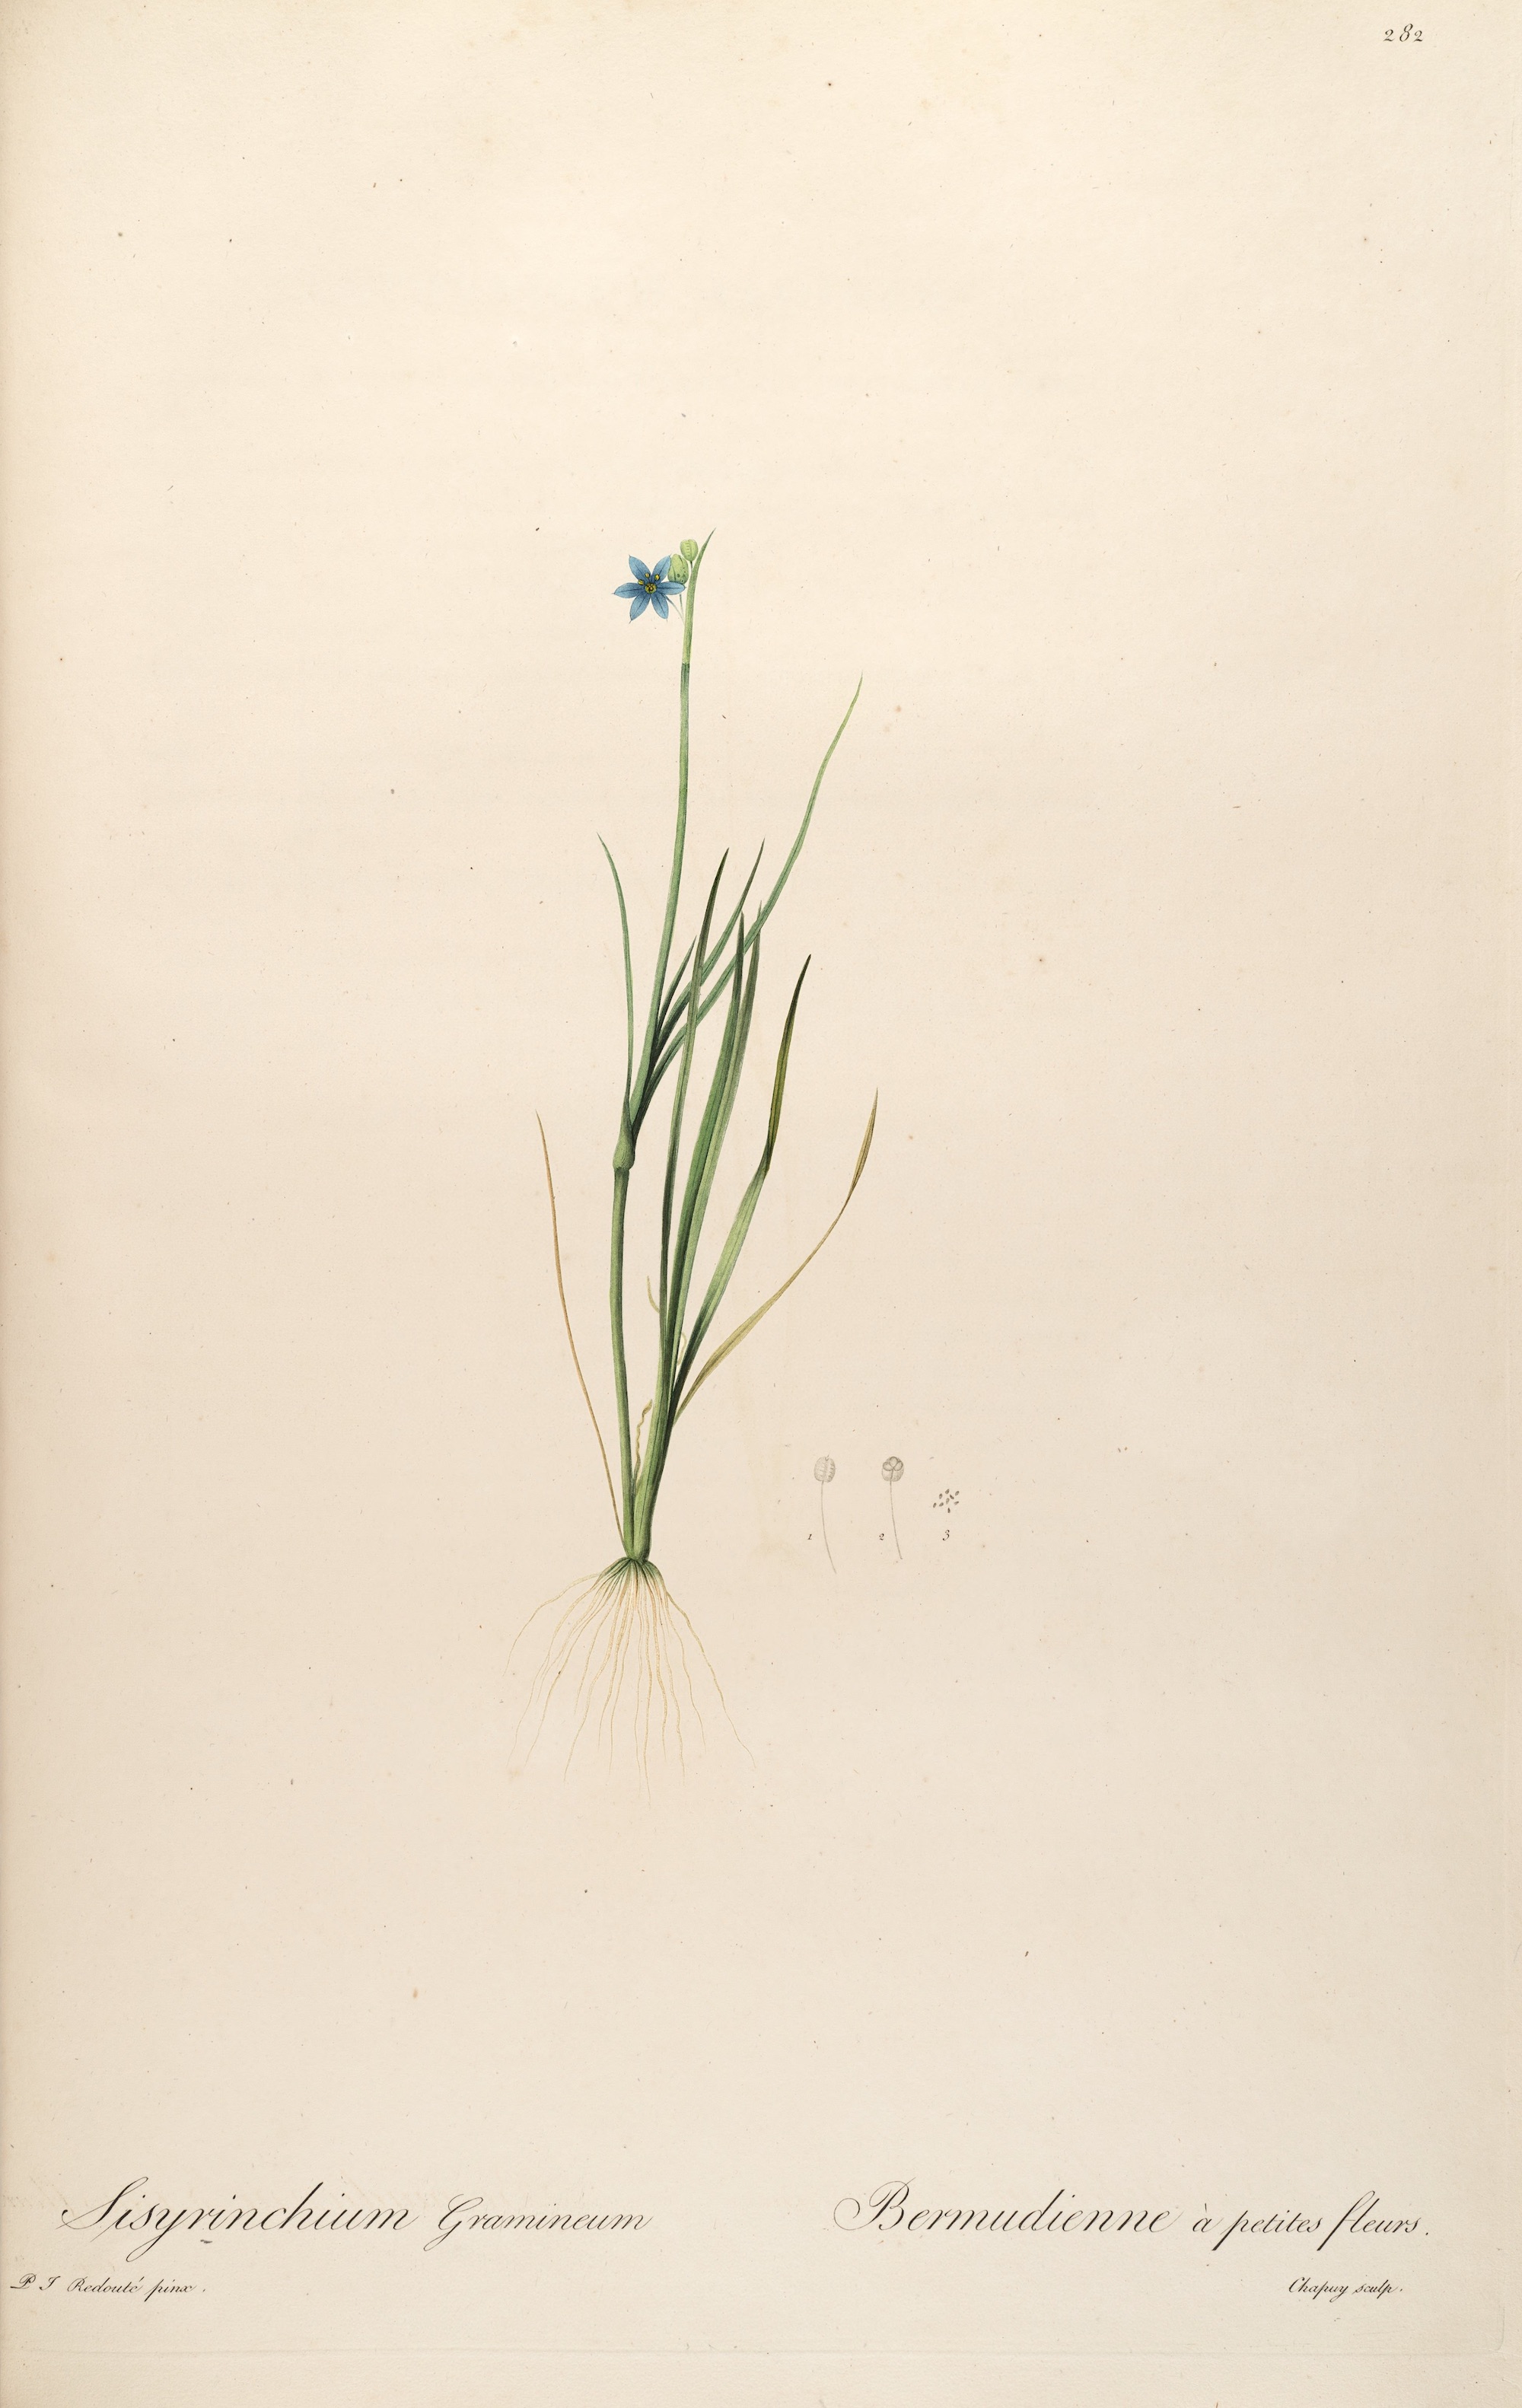 Blue-eyed grass (Sisyrinchium angustifolium) illustration  by P.J. Redouté circa 1805.